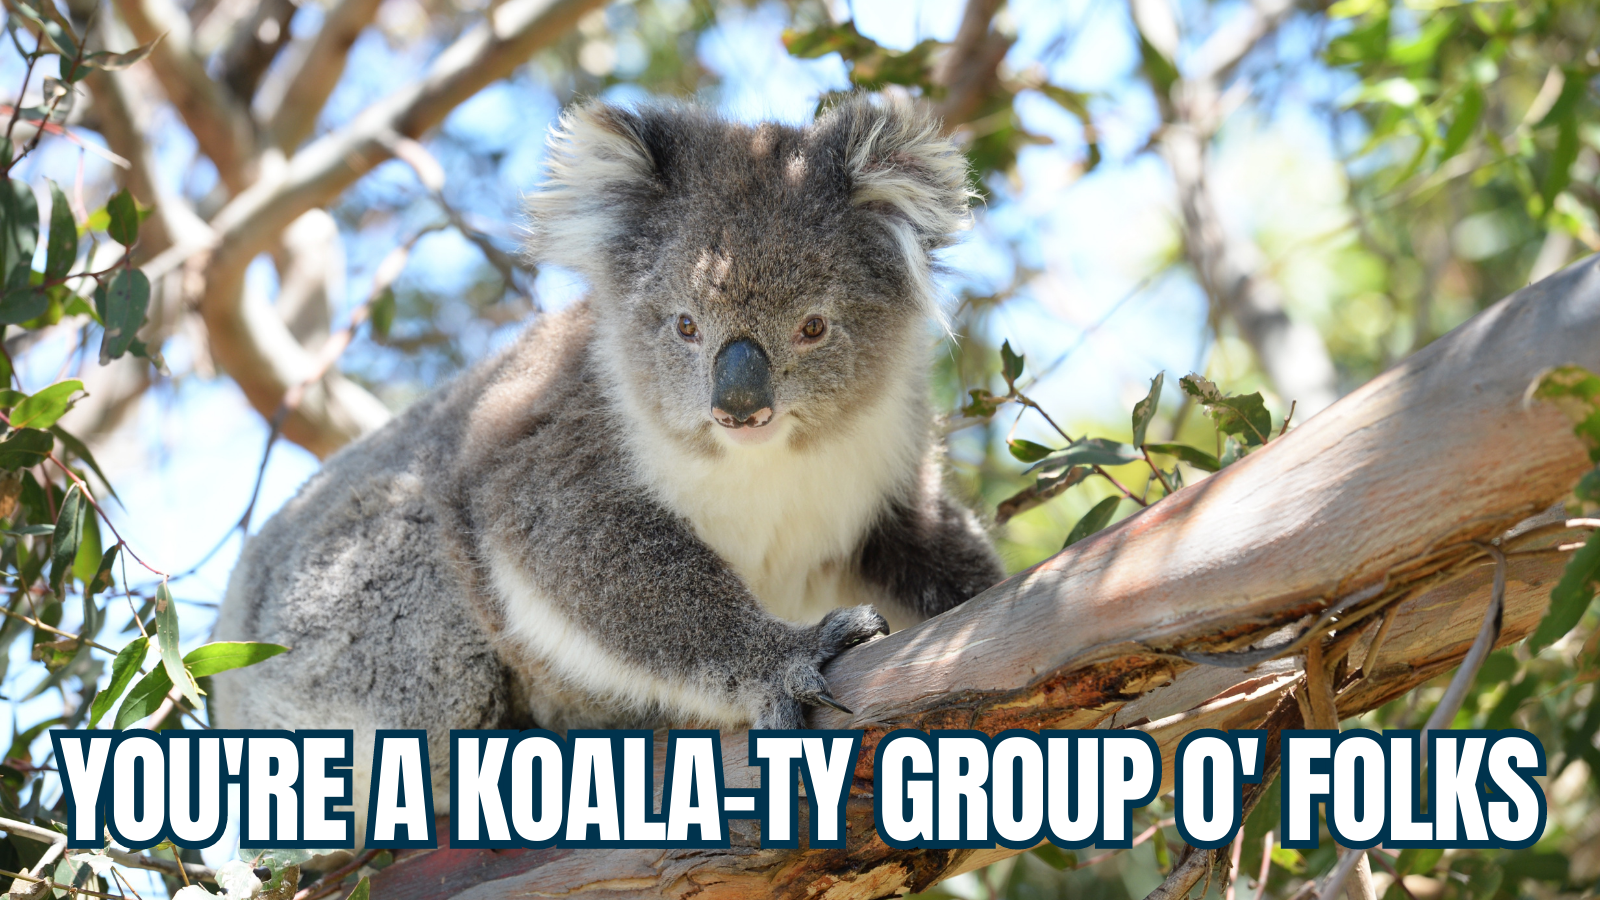 Picture of a Koala with the headline "You're a koala-ty group of folks"